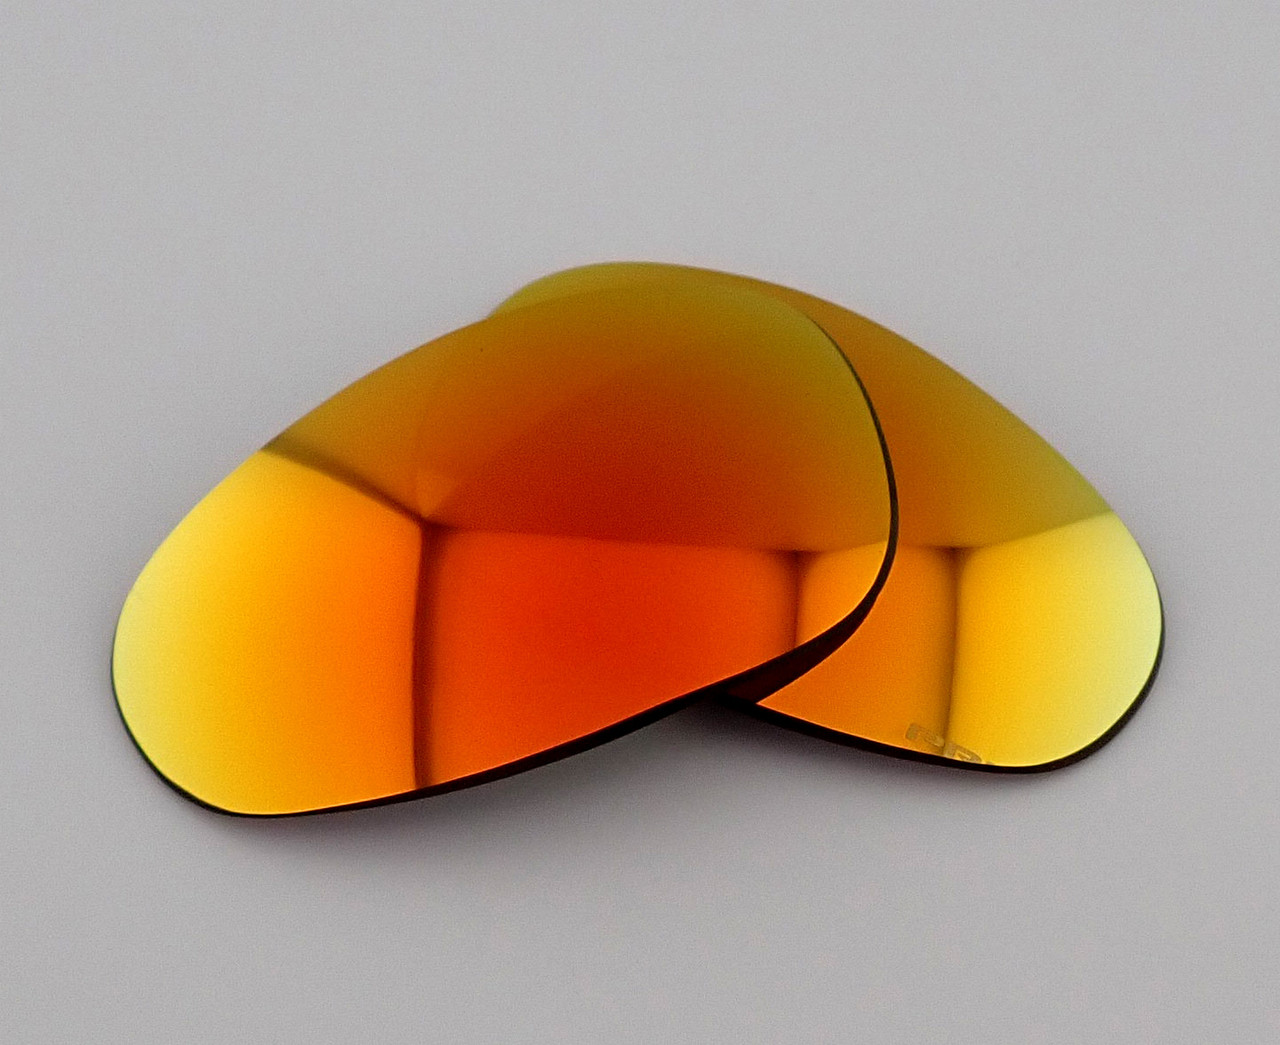 Polarized Replacement Lenses for-OAKLEY Juliet Sunglasses 24K Gold